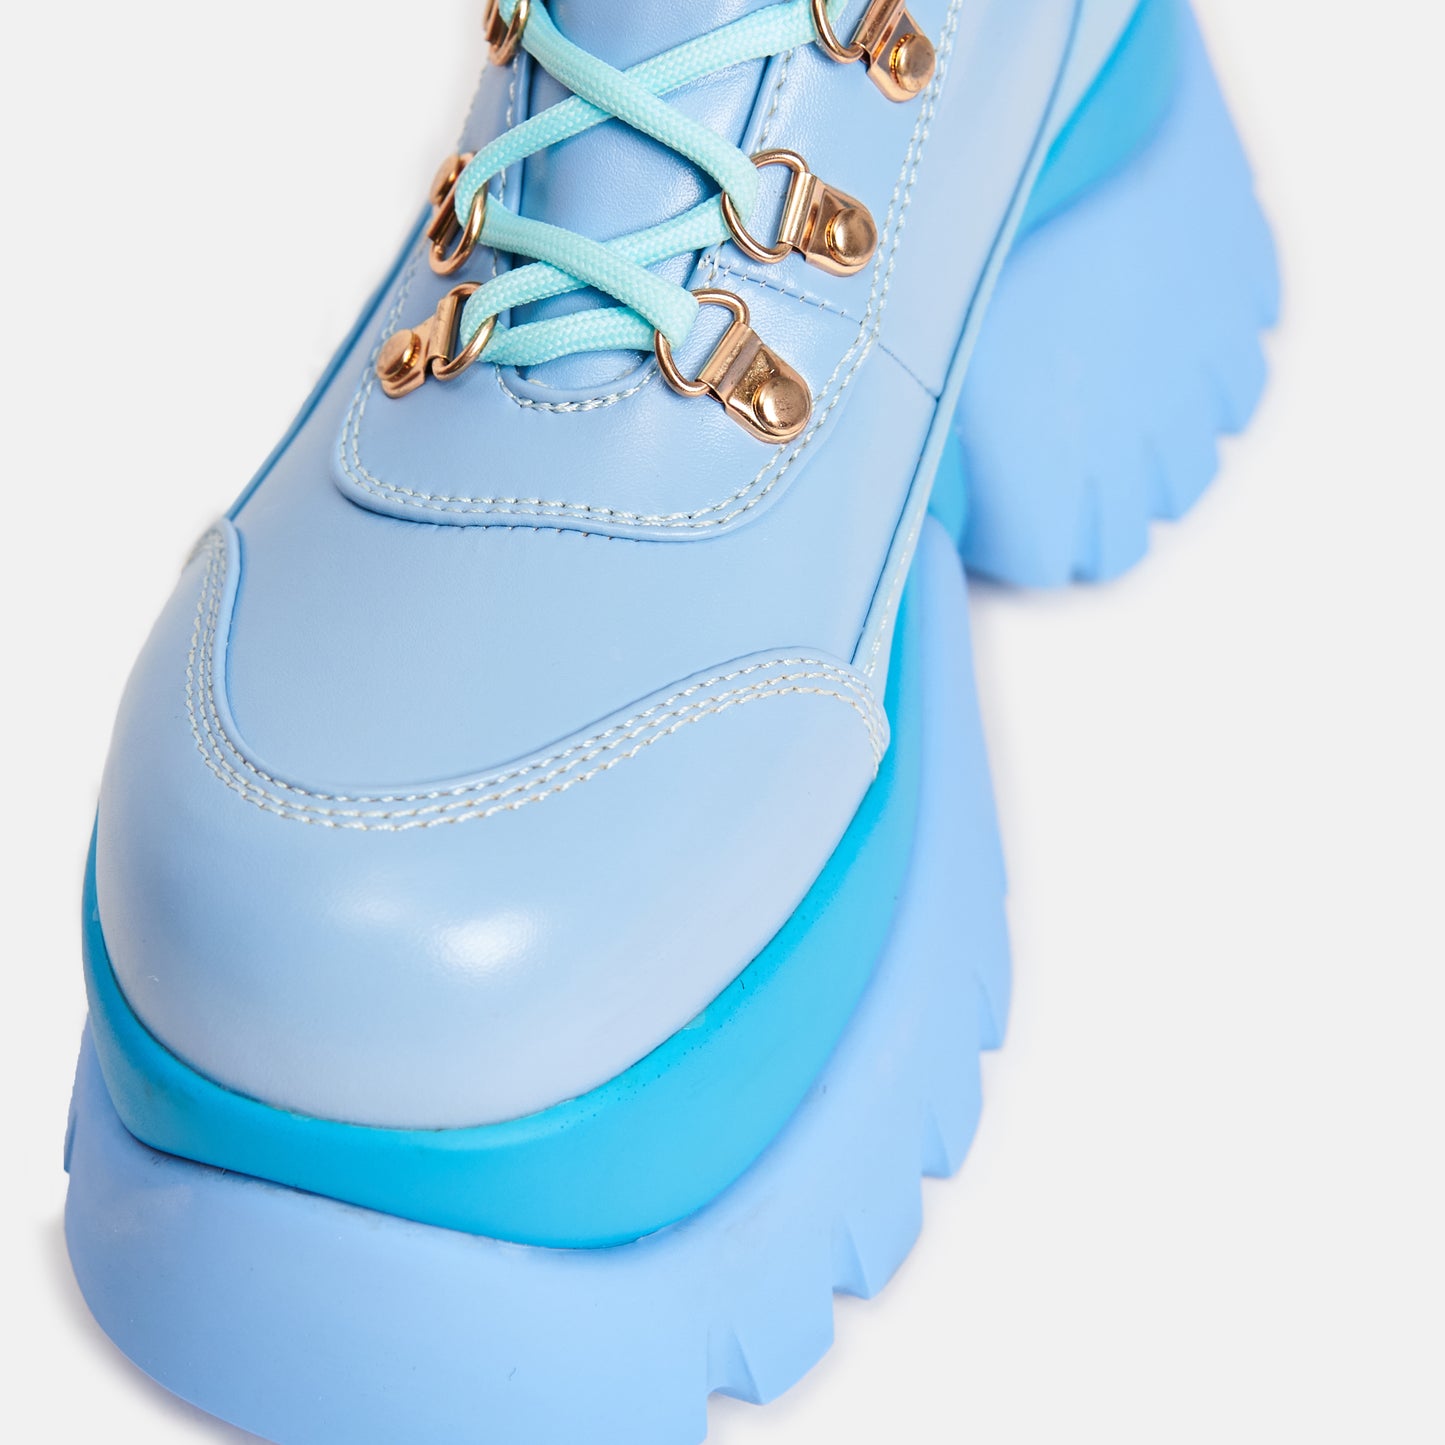 Crybaby Blue Vilun Platform Boots - Ankle Boots - KOI Footwear - Blue - Platform Detail